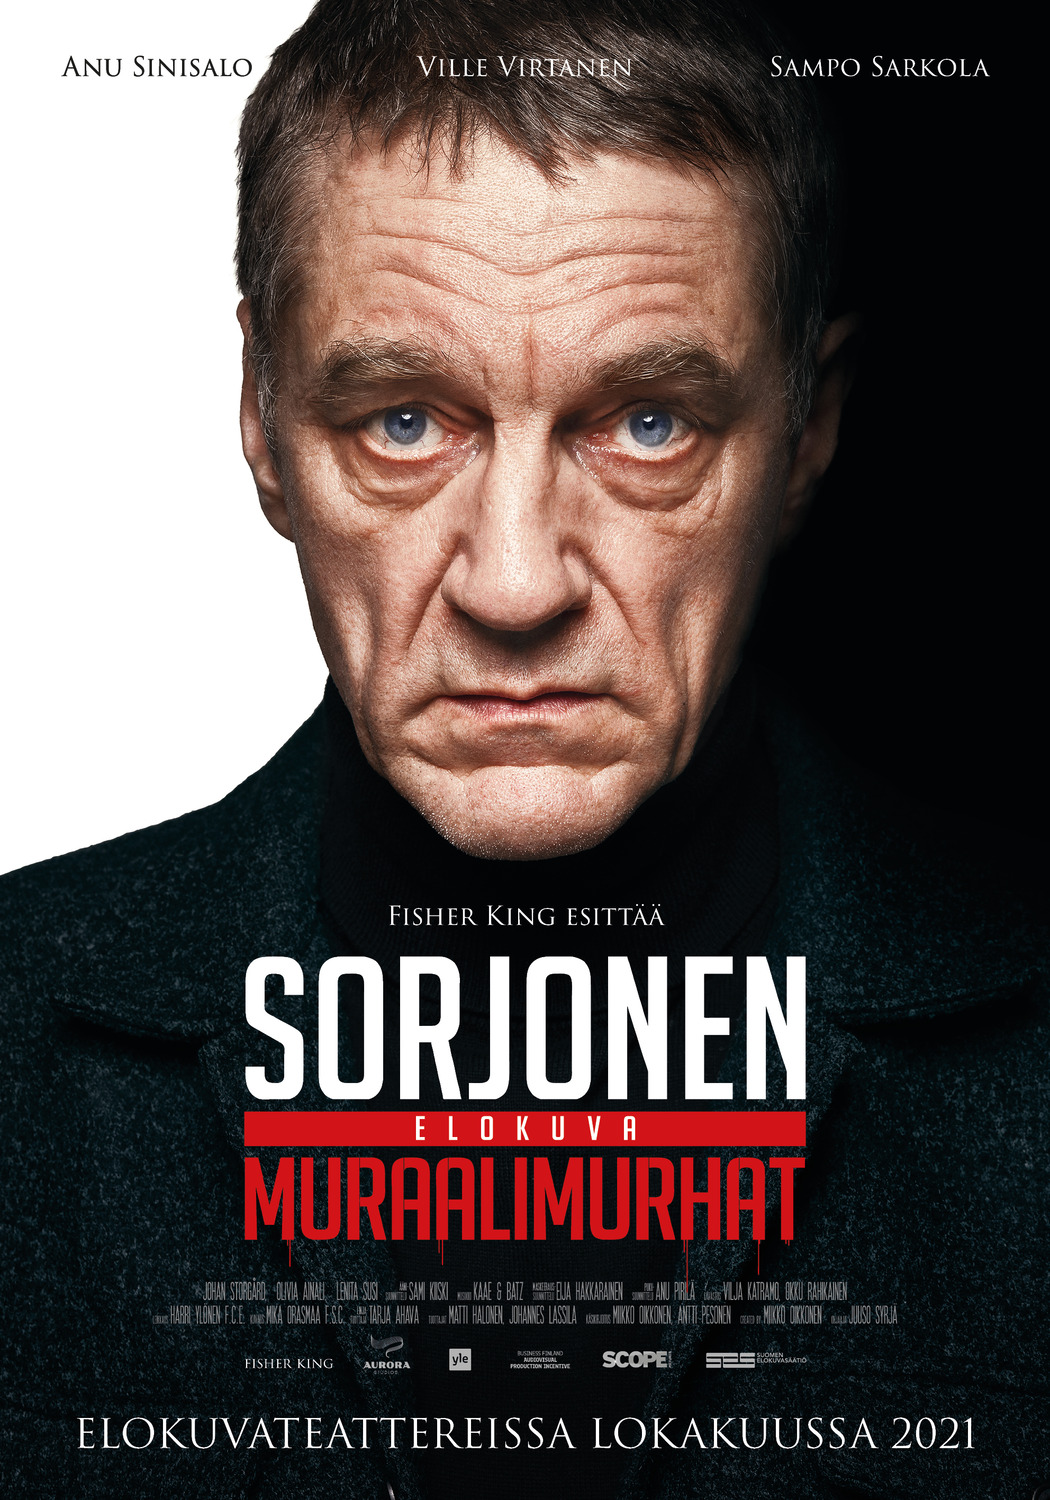 Extra Large Movie Poster Image for Sorjonen: Muraalimurhat 